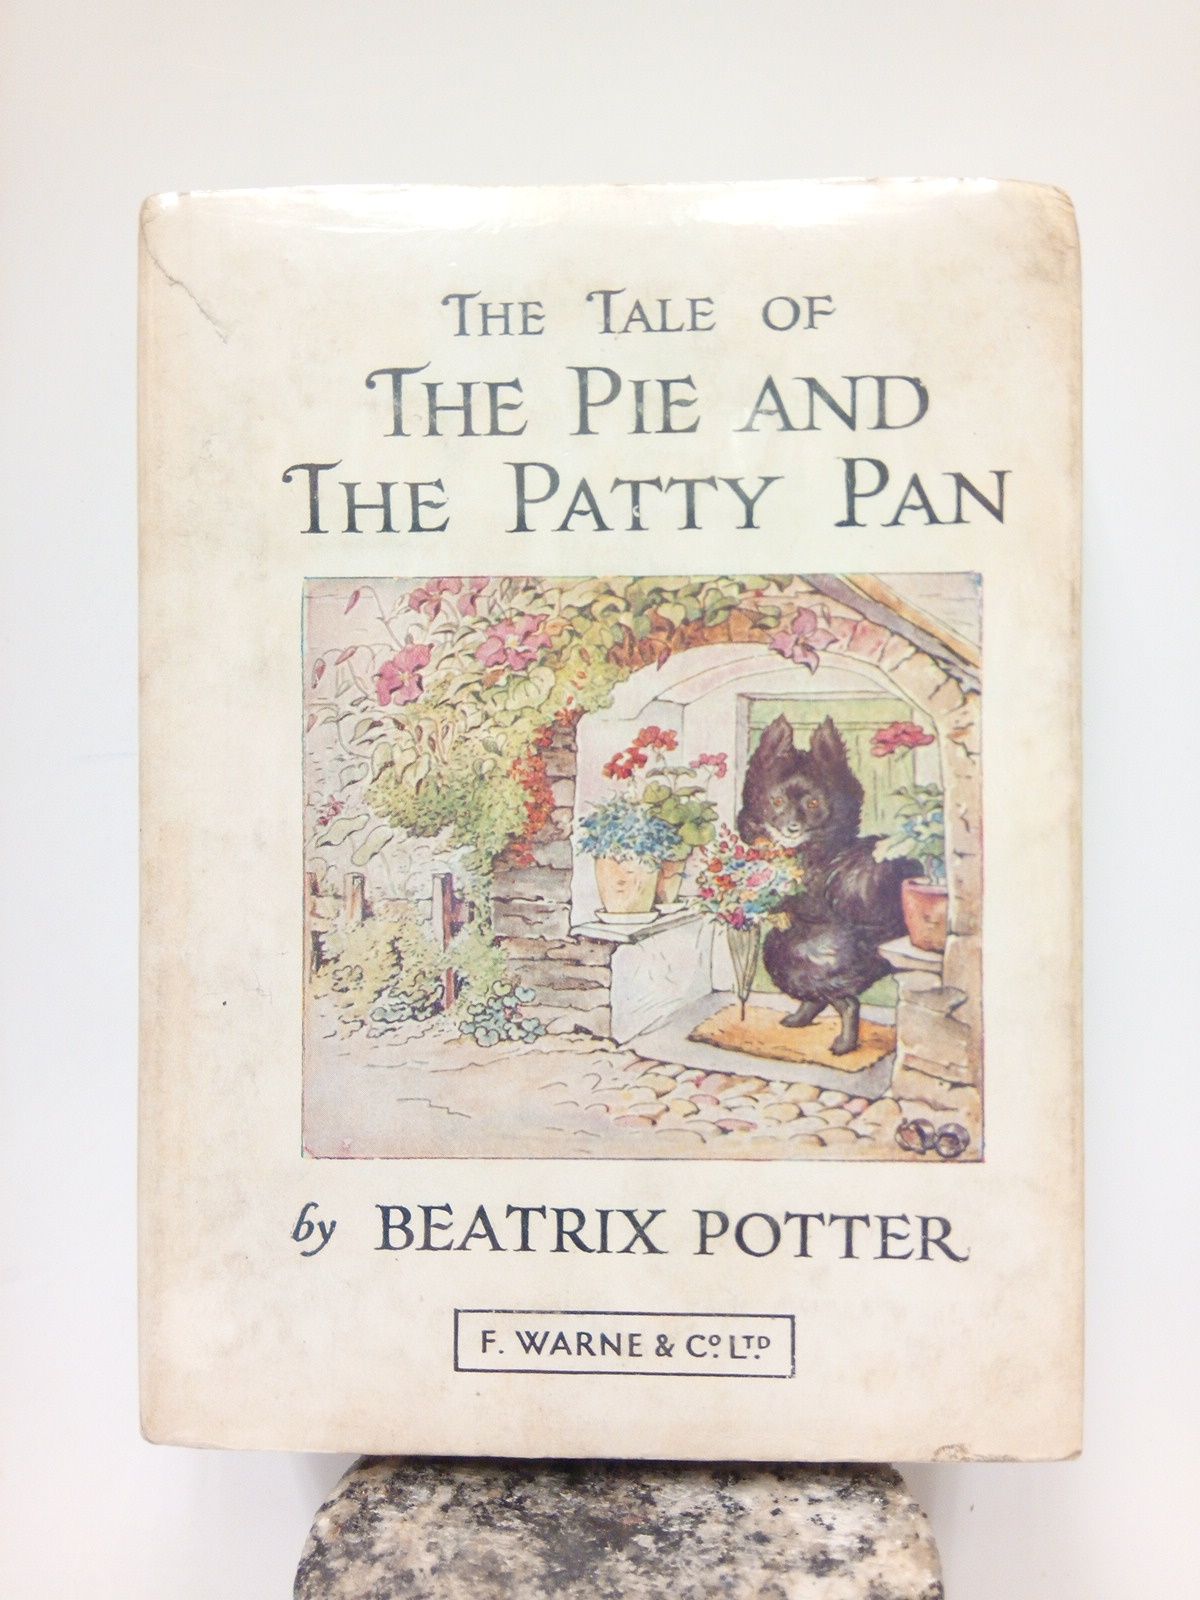 La historia de Beatrix Potter Tom Kitten Ilustración de p 29